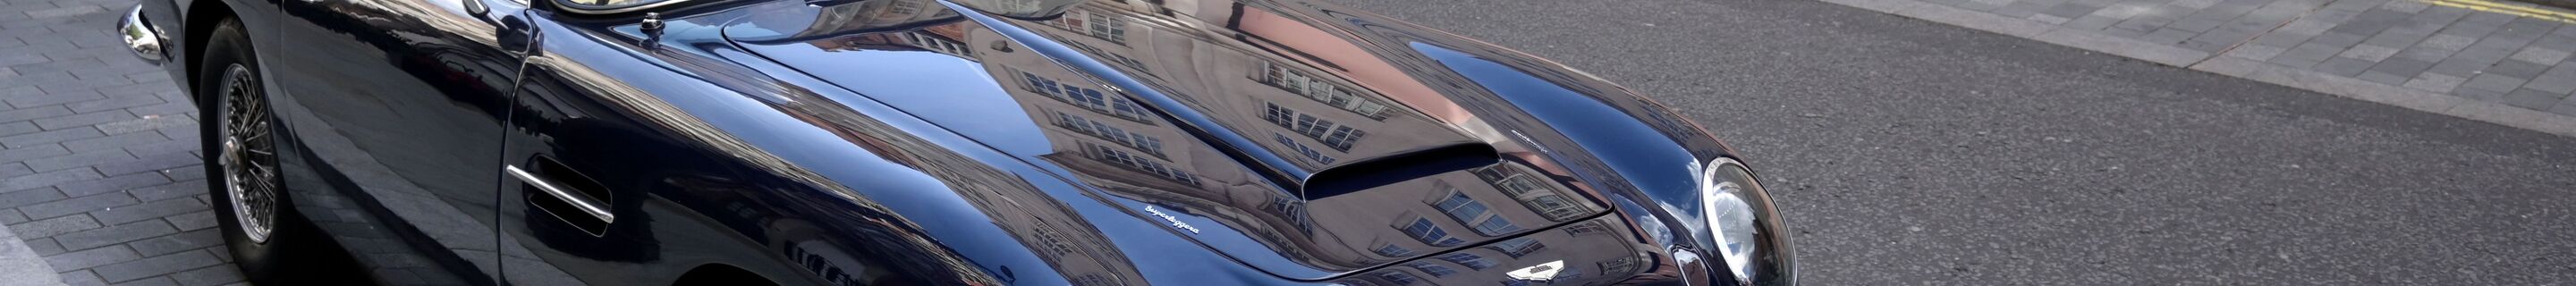 Aston Martin DB5 Convertible